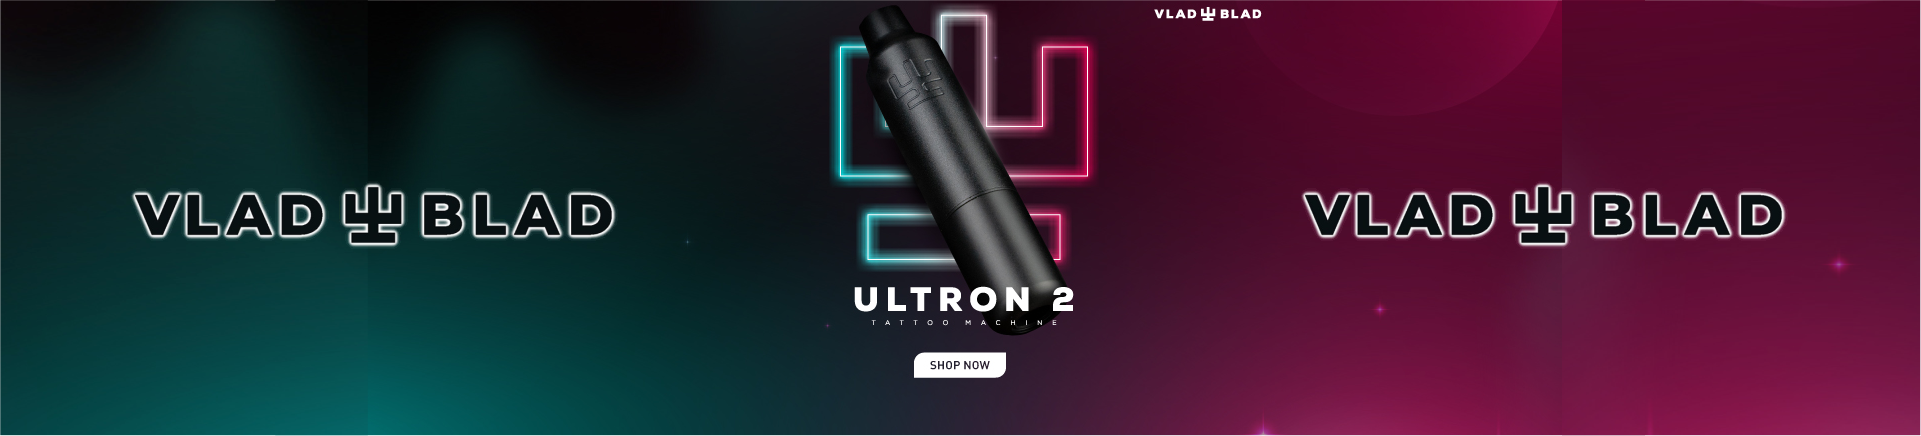 Ultron 2